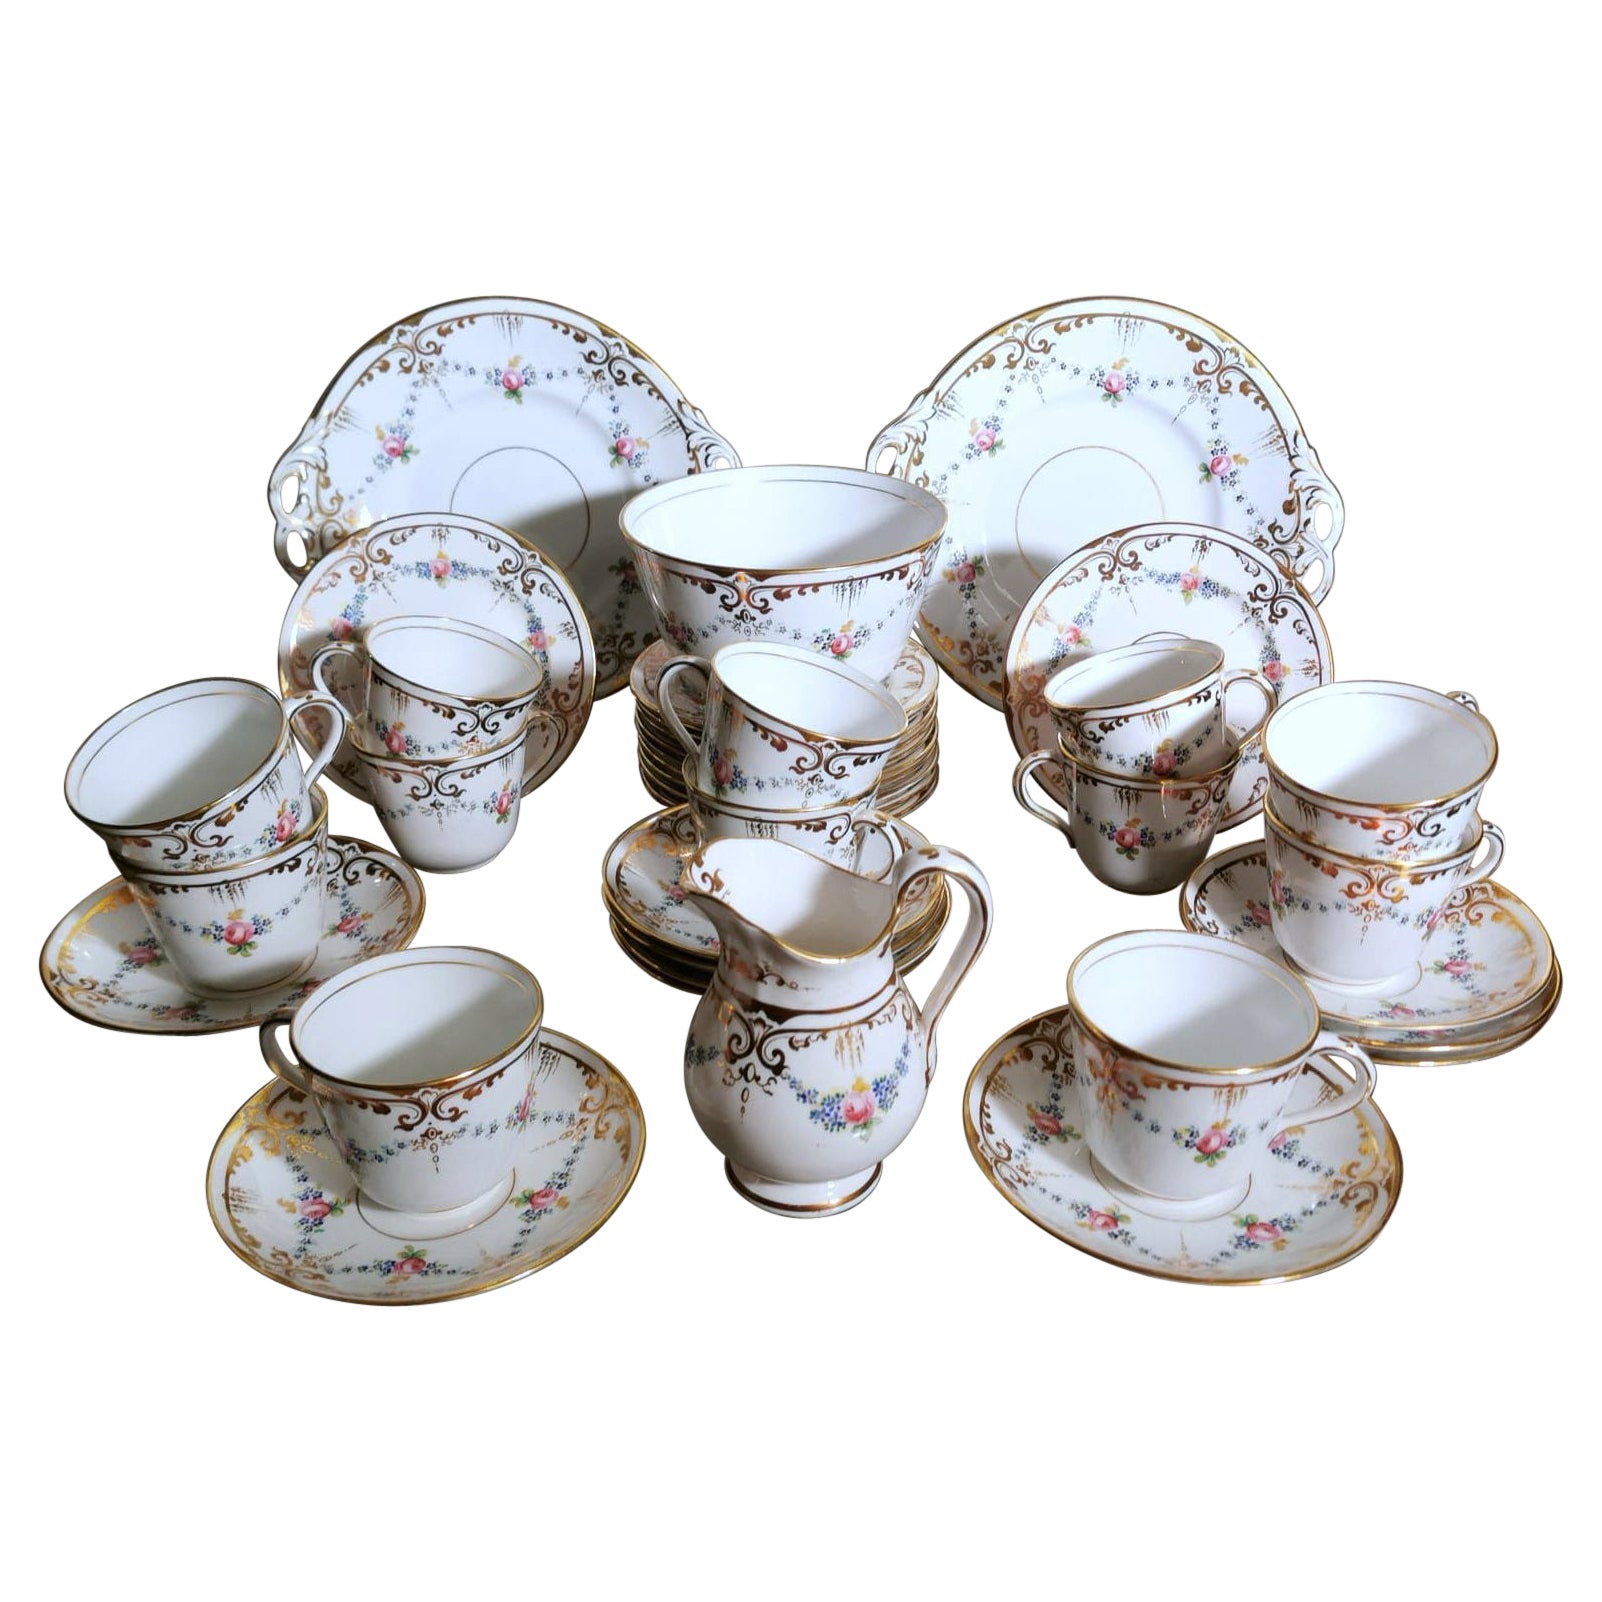 Napoleon III Style Porcelain De Paris Coffee/Tea Service For 12 People-28 Pieces